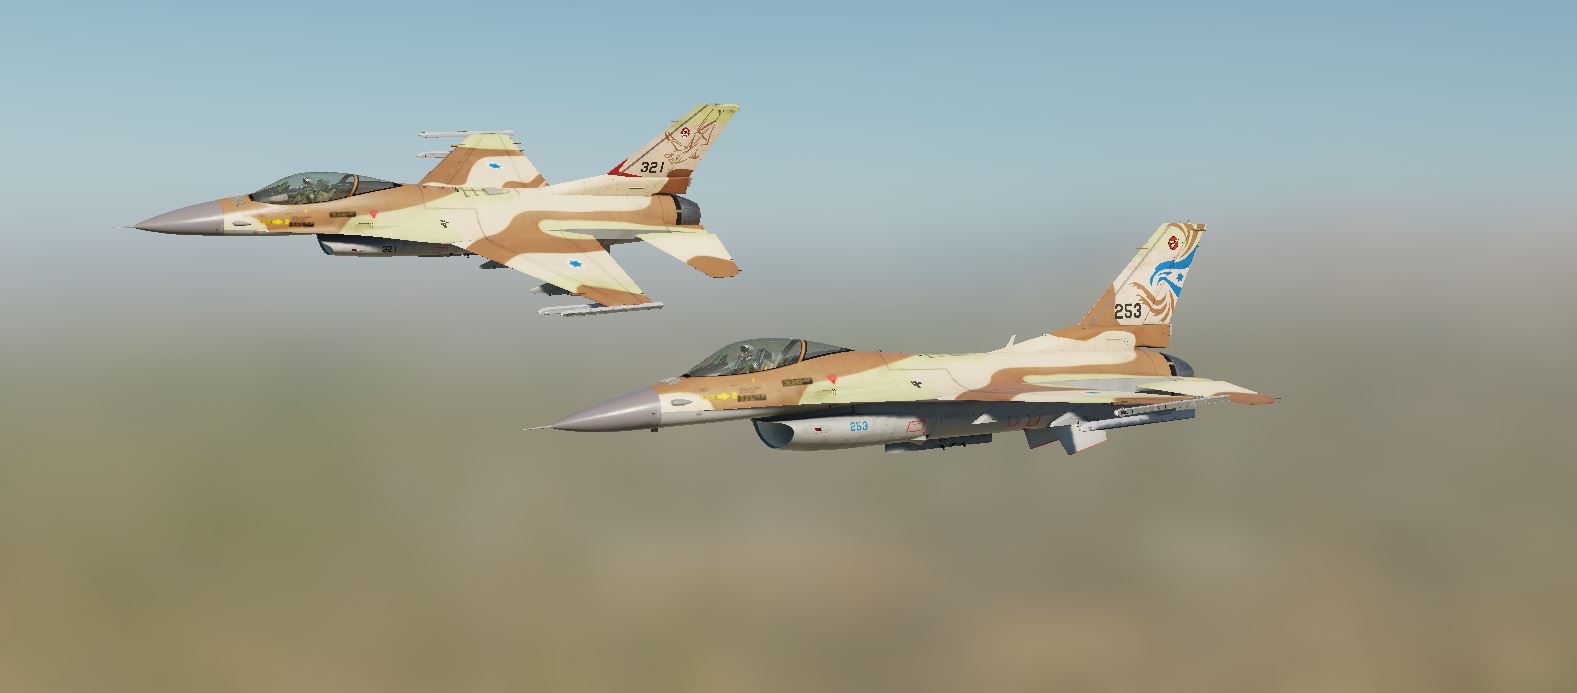 IAF "Bat" 119th and "Negev " 253rd Squadrons